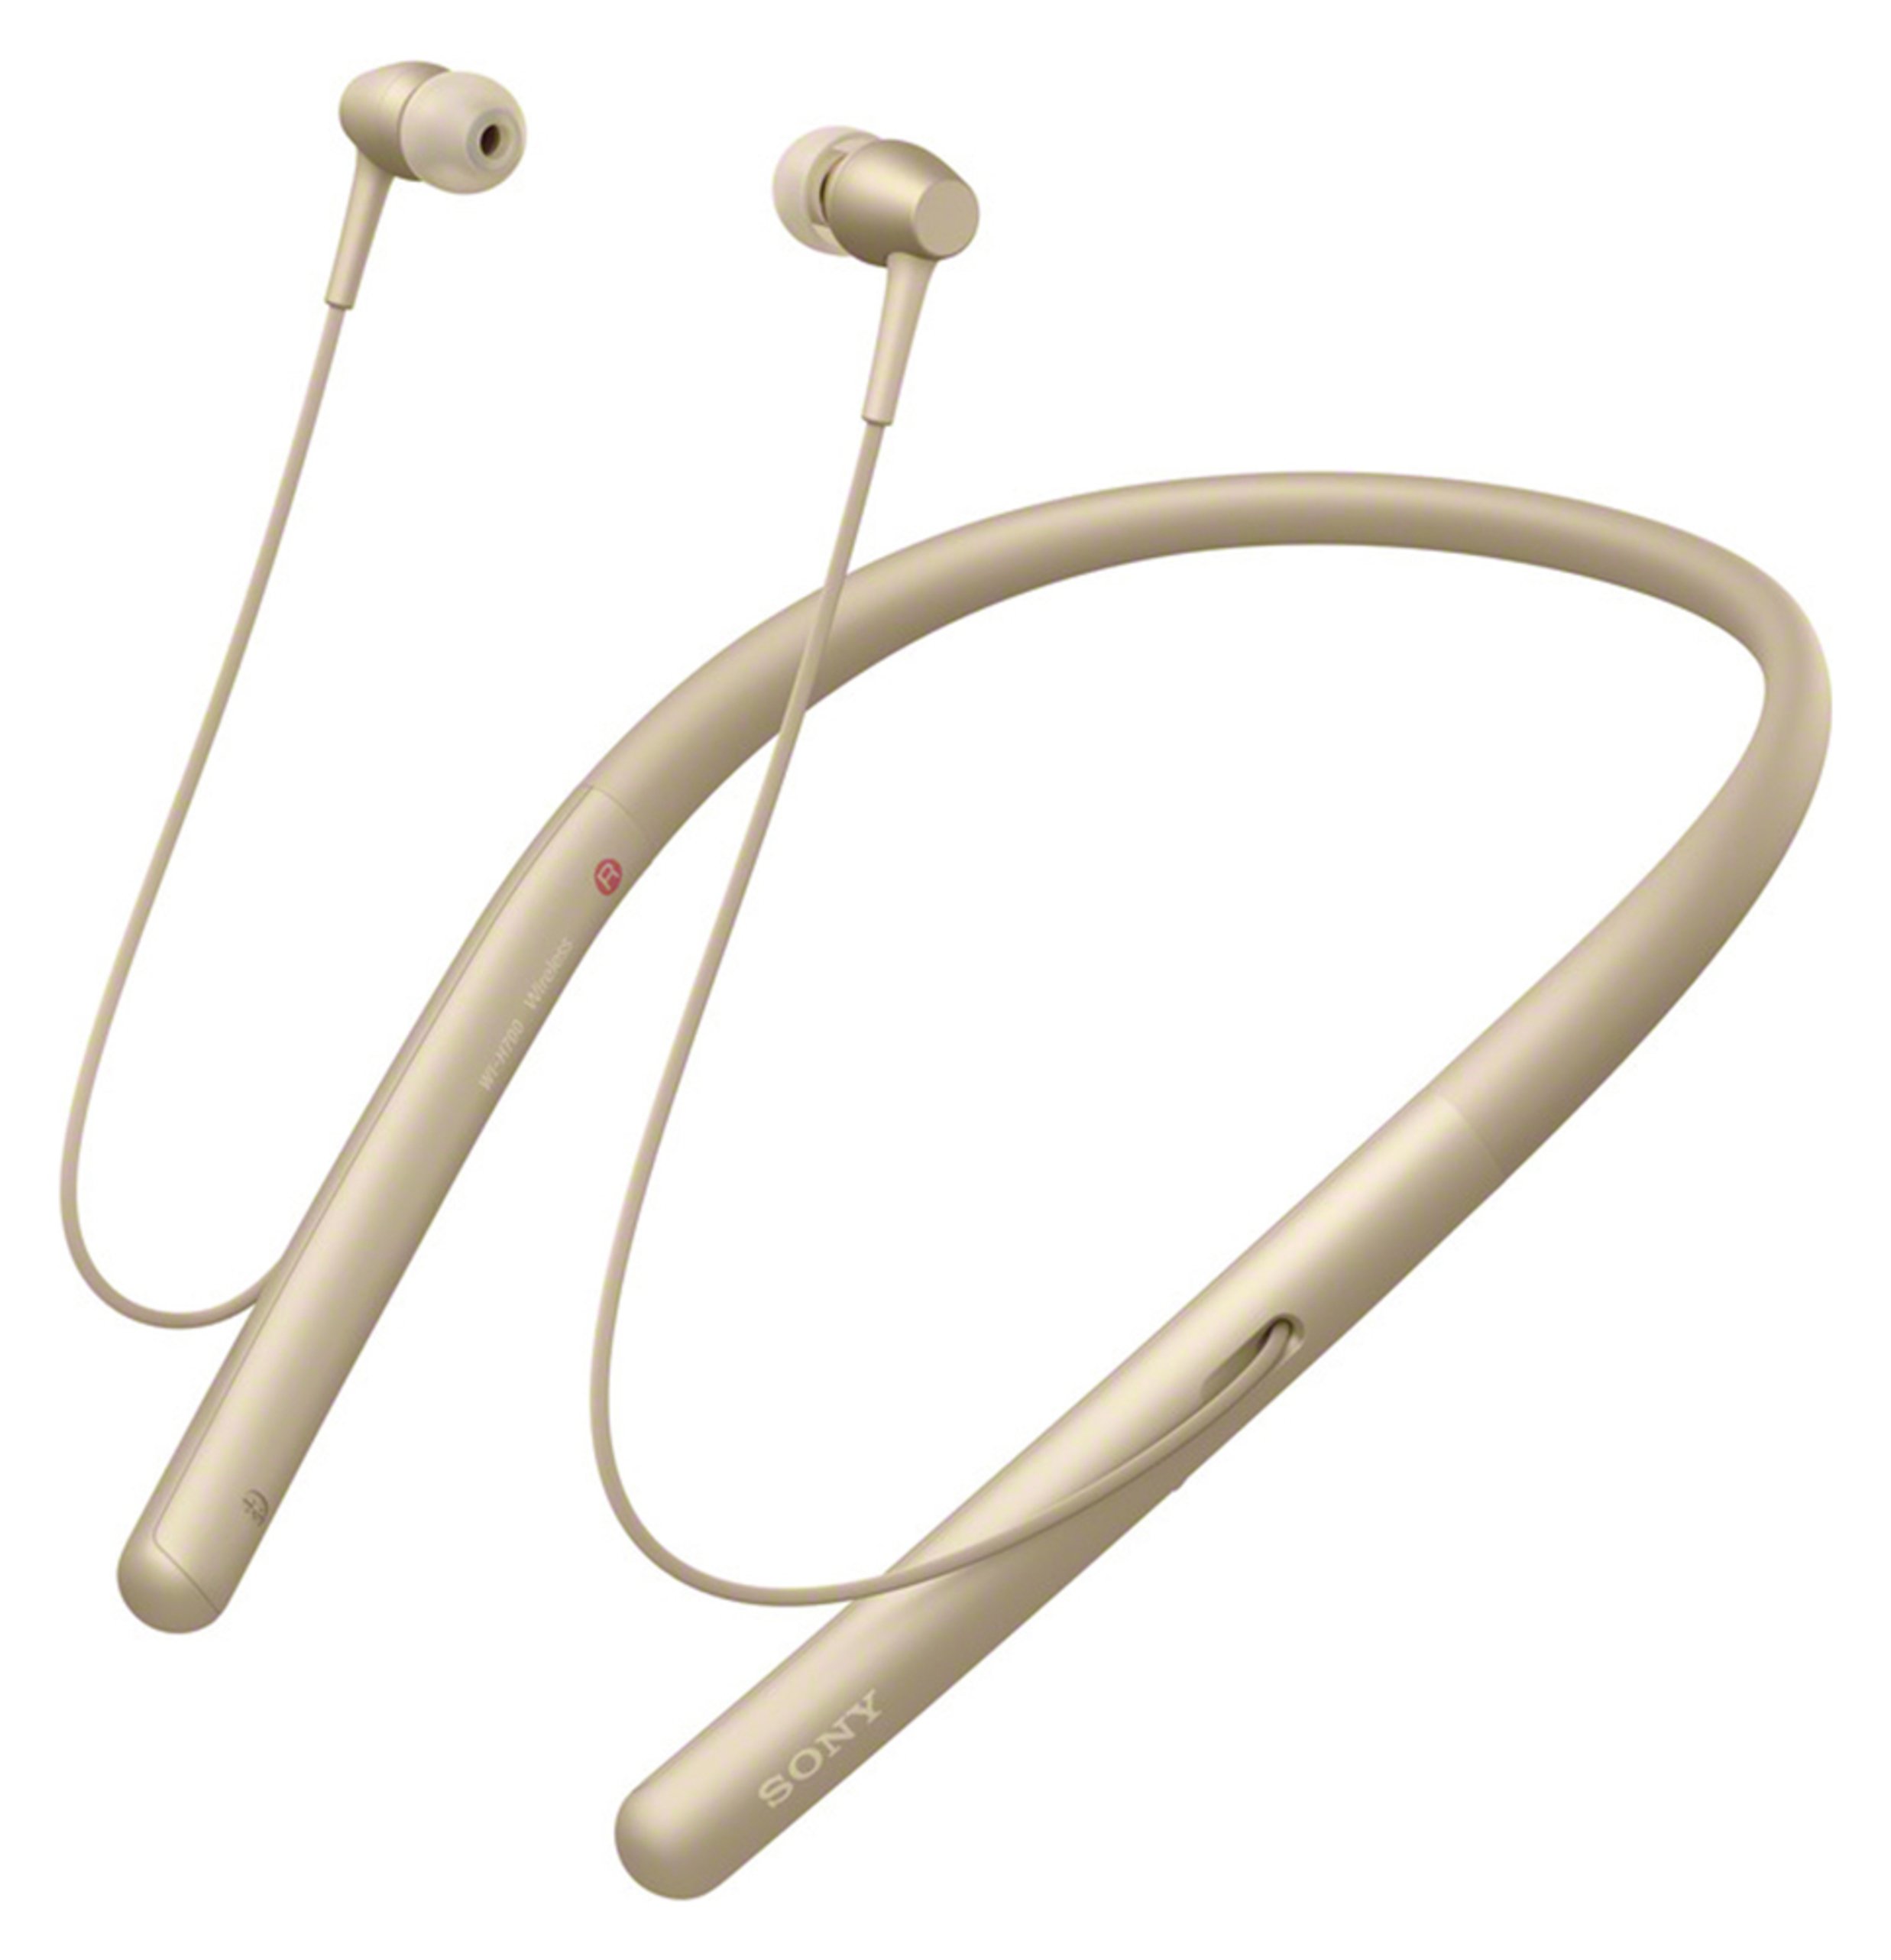 Sony H.ear WI-H700 Neckband Wireless Headphones - Gold